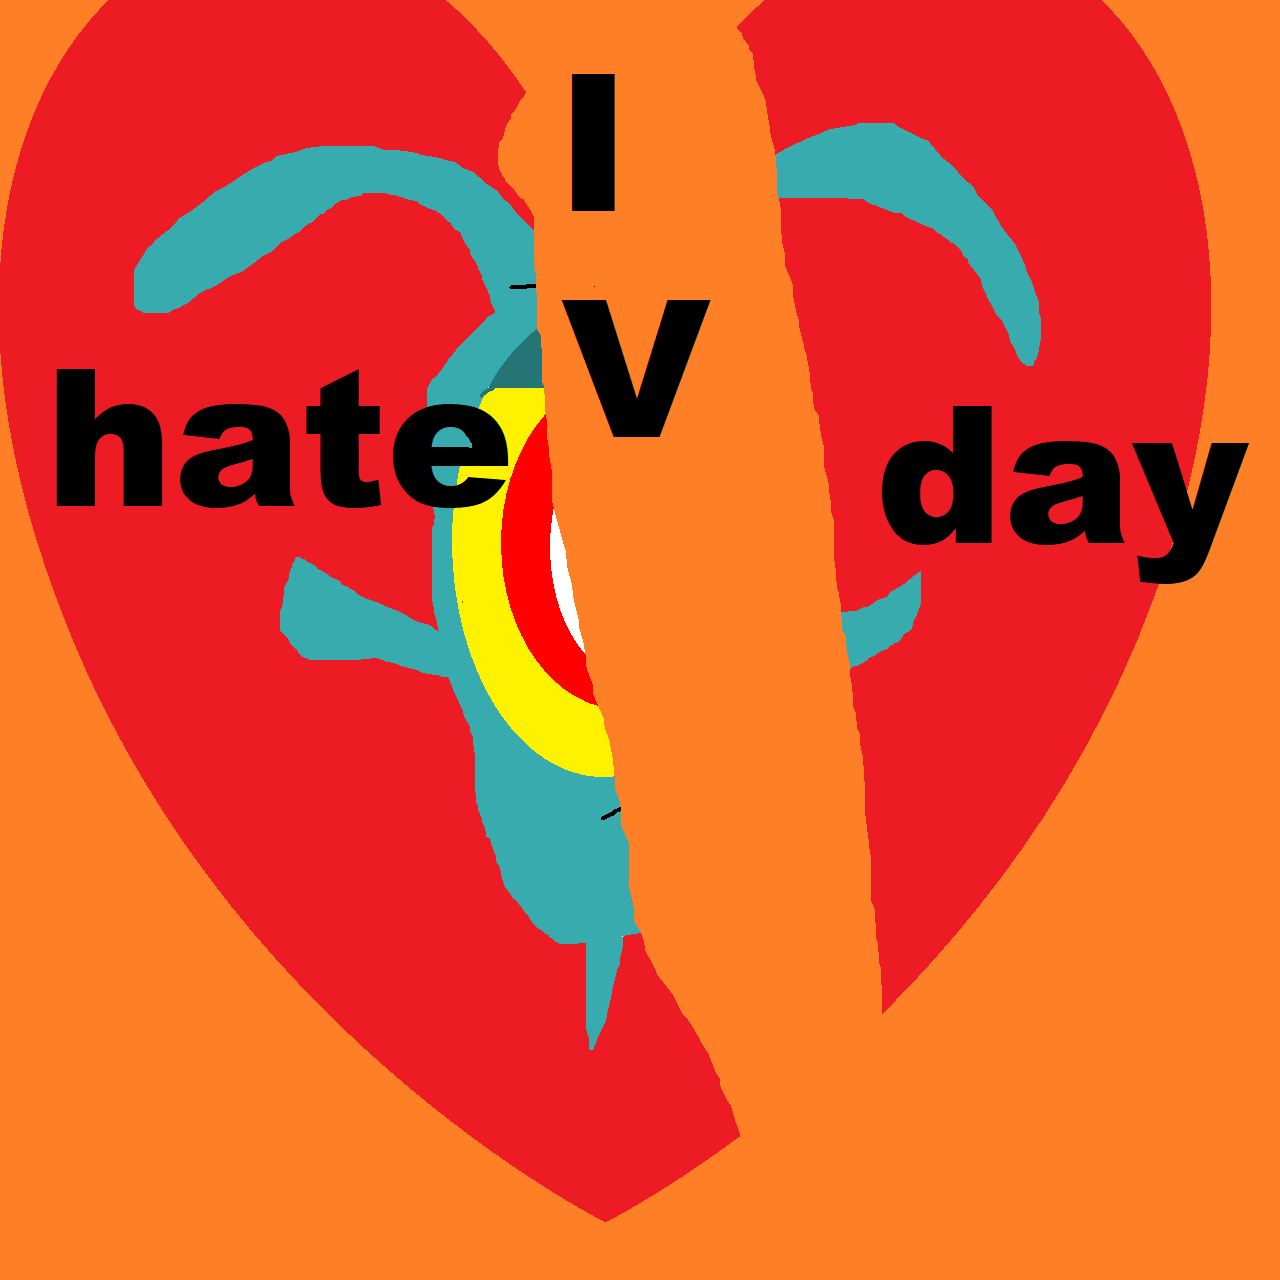 Plankton Hates V Day A Bit Too Much by Falconlobo